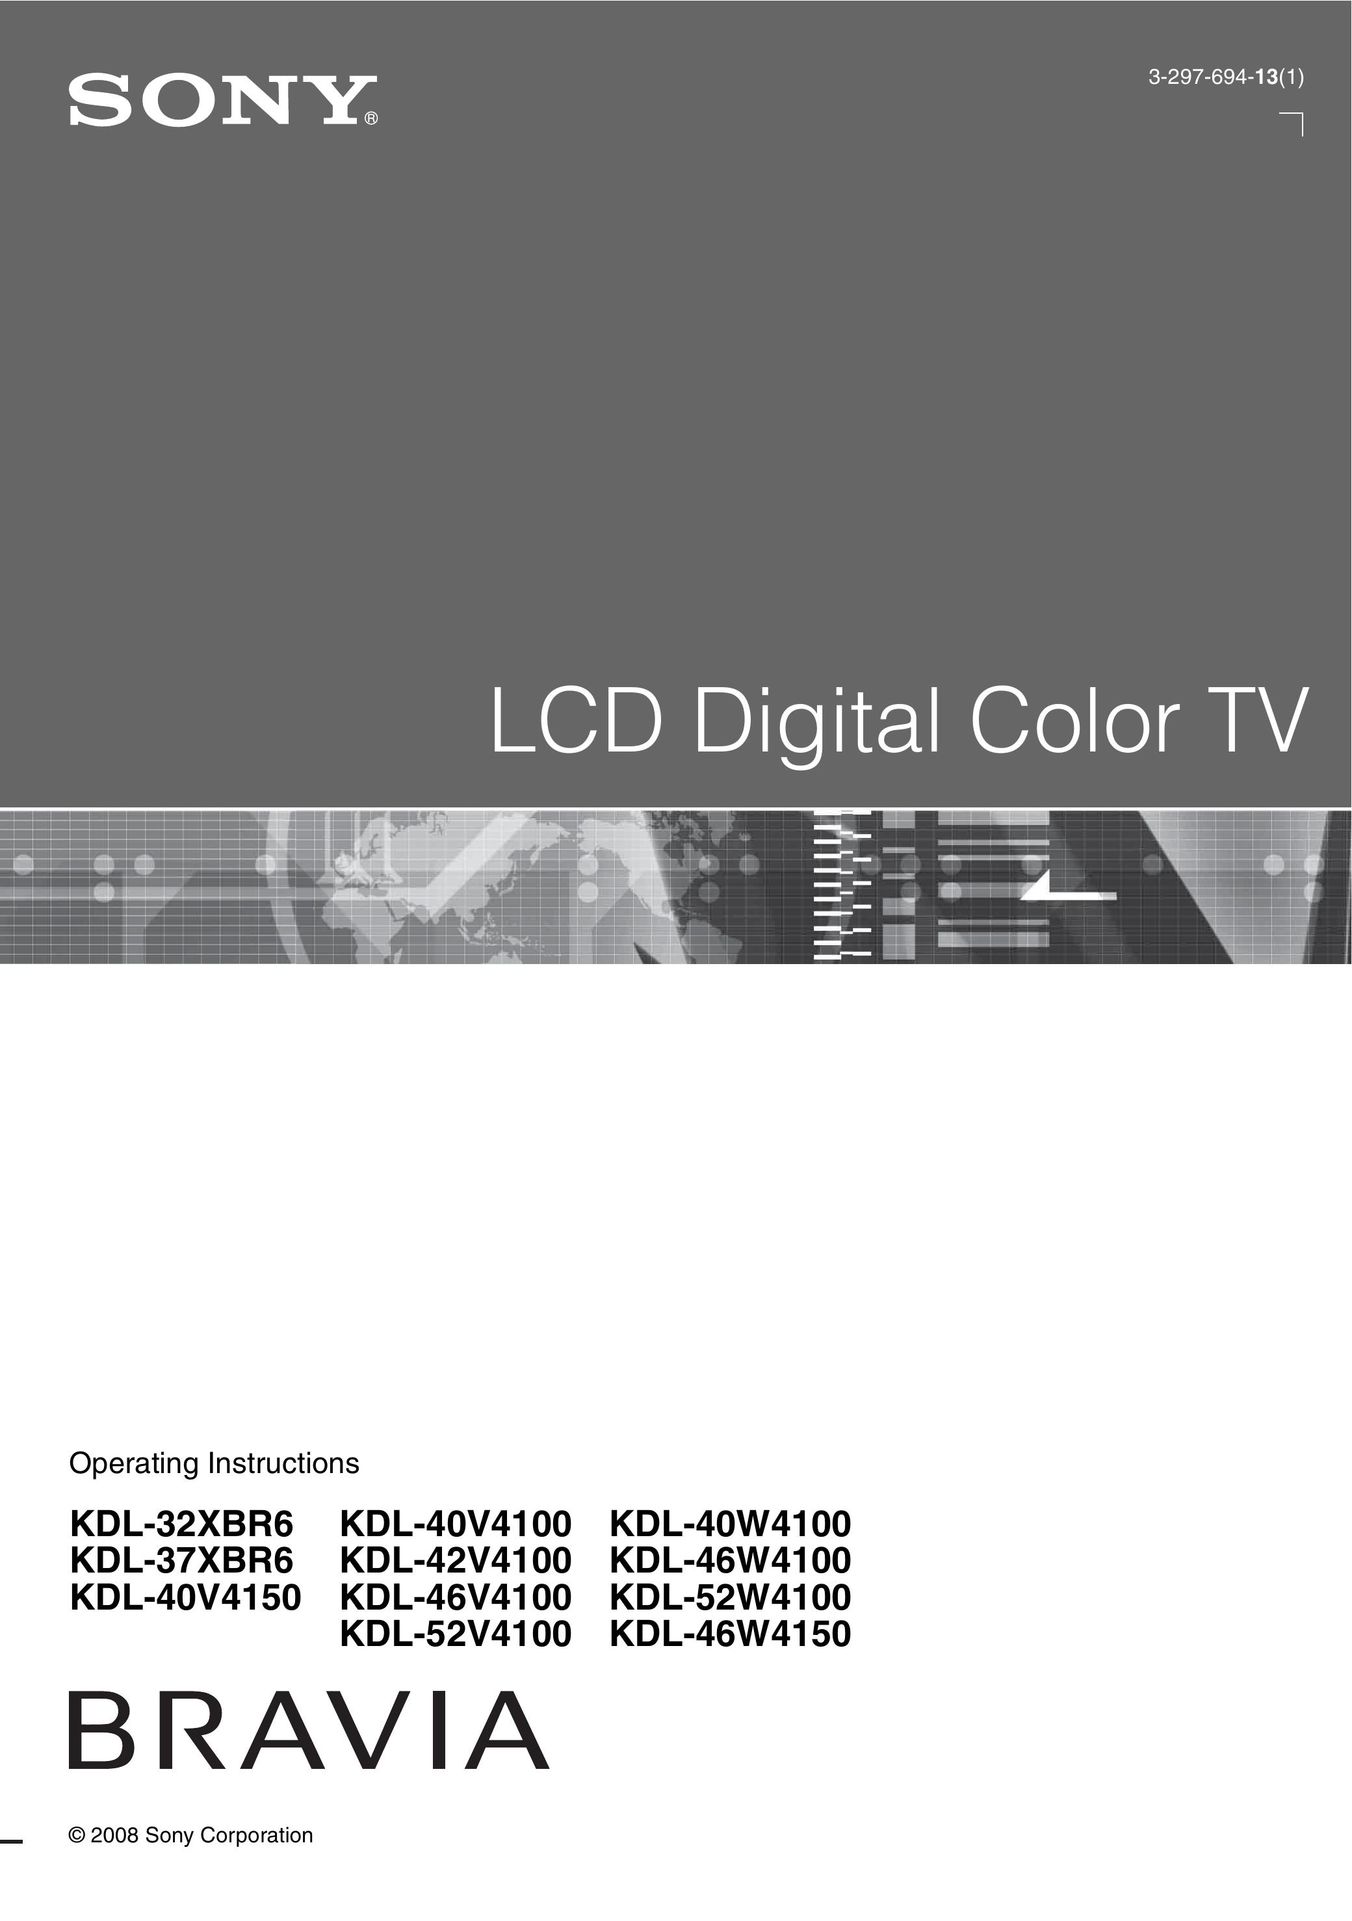 Sony KDL-42V4100 Beverage Dispenser User Manual